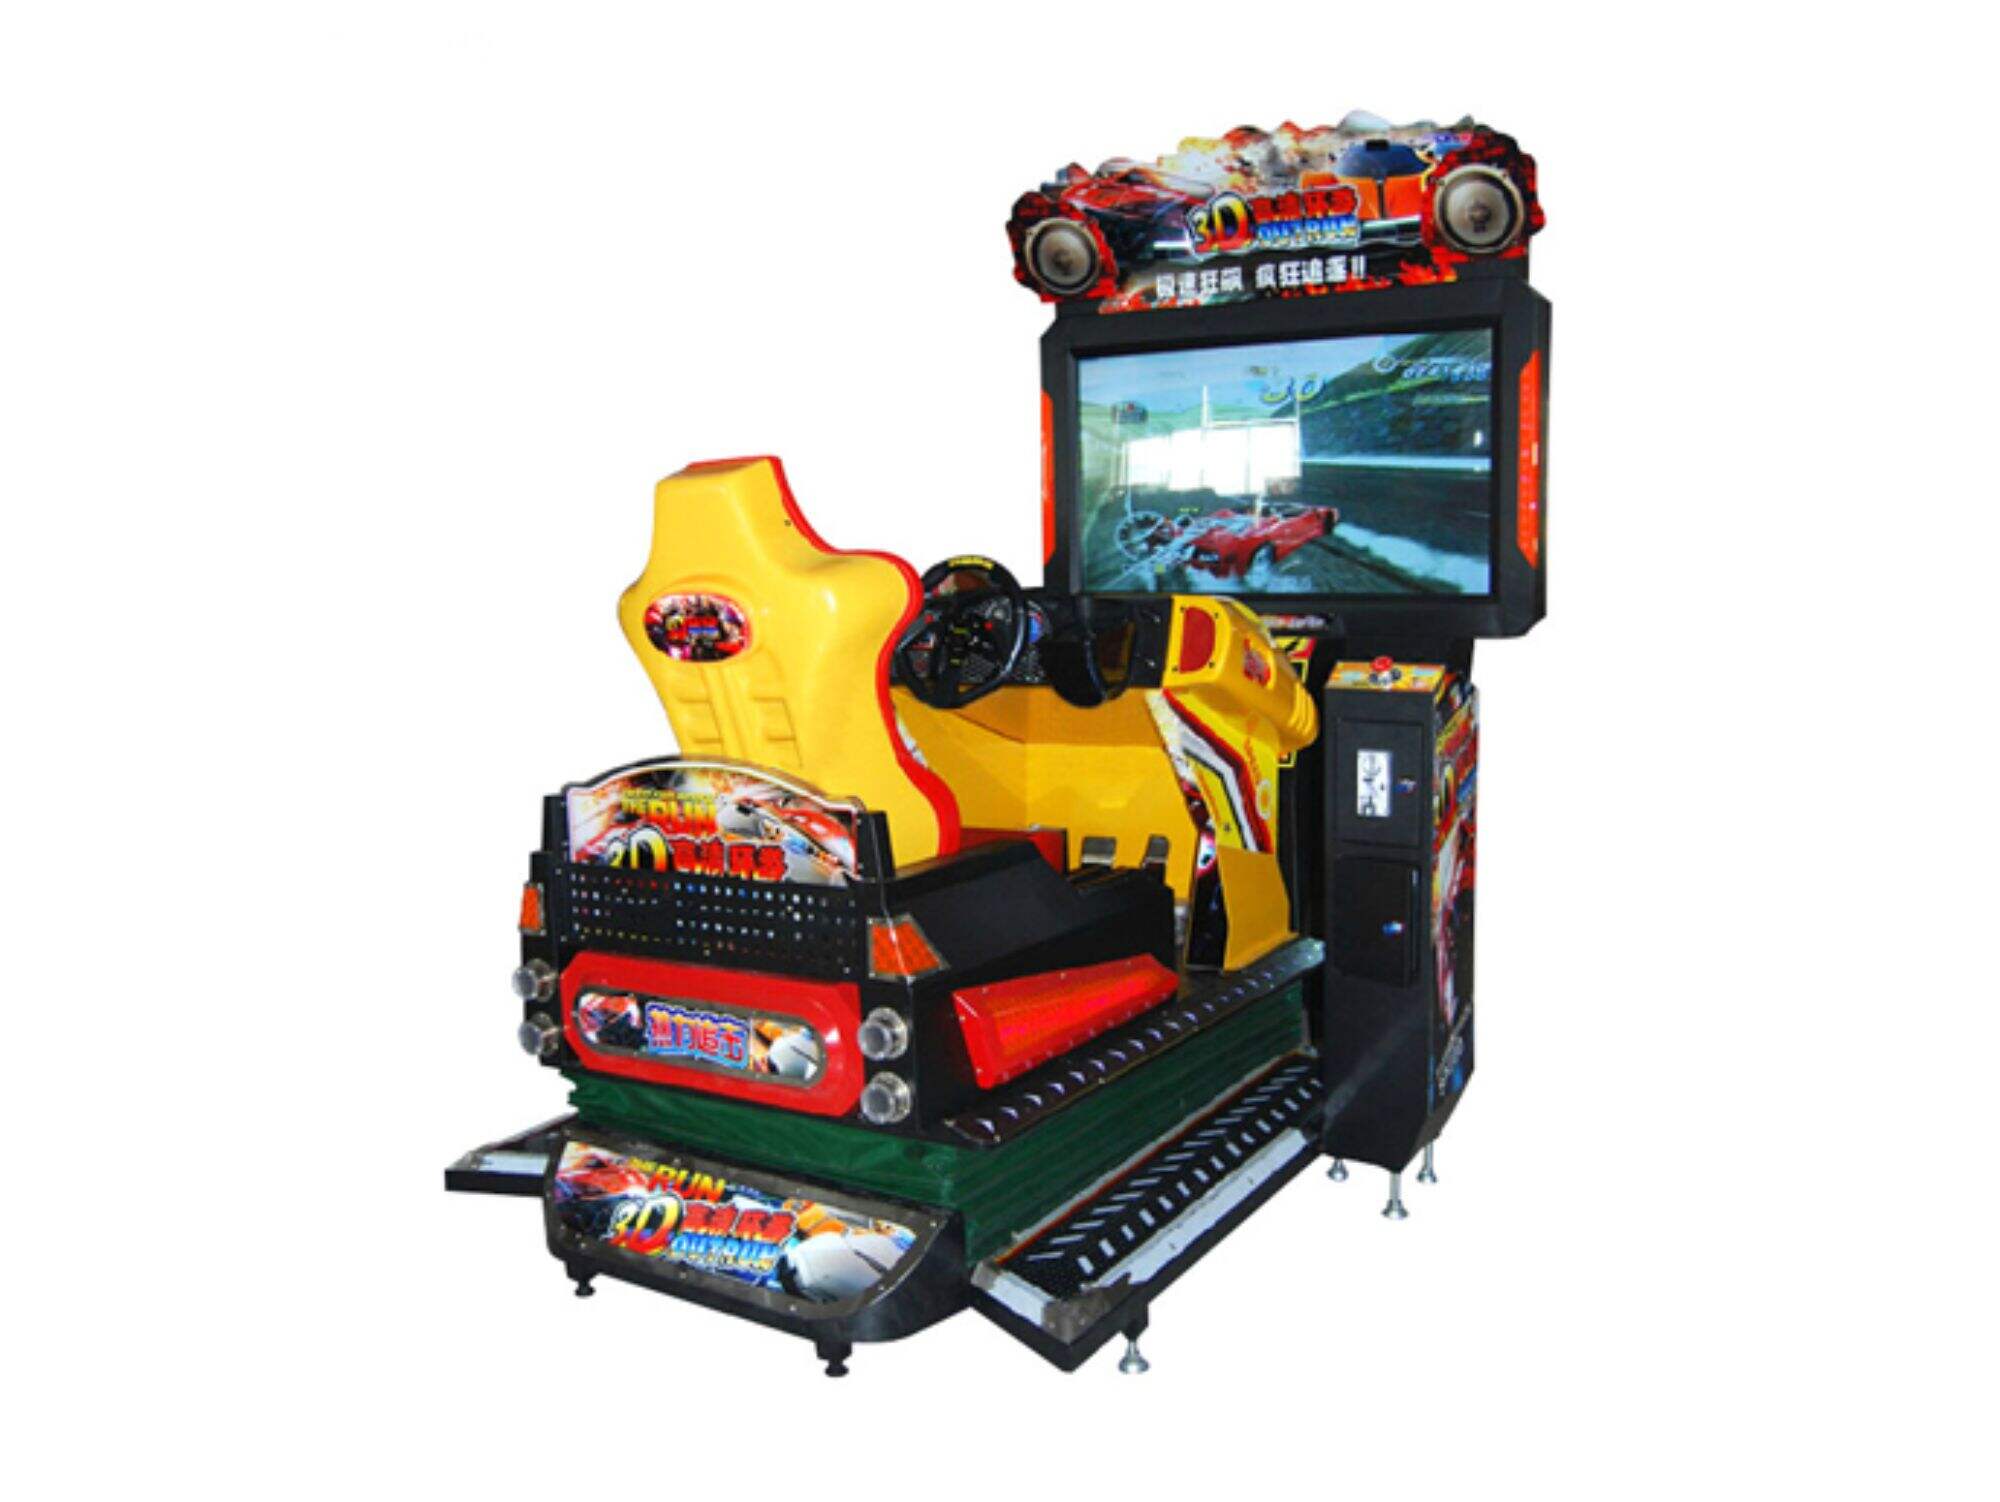 3D Dynamic Racing Arcade Game